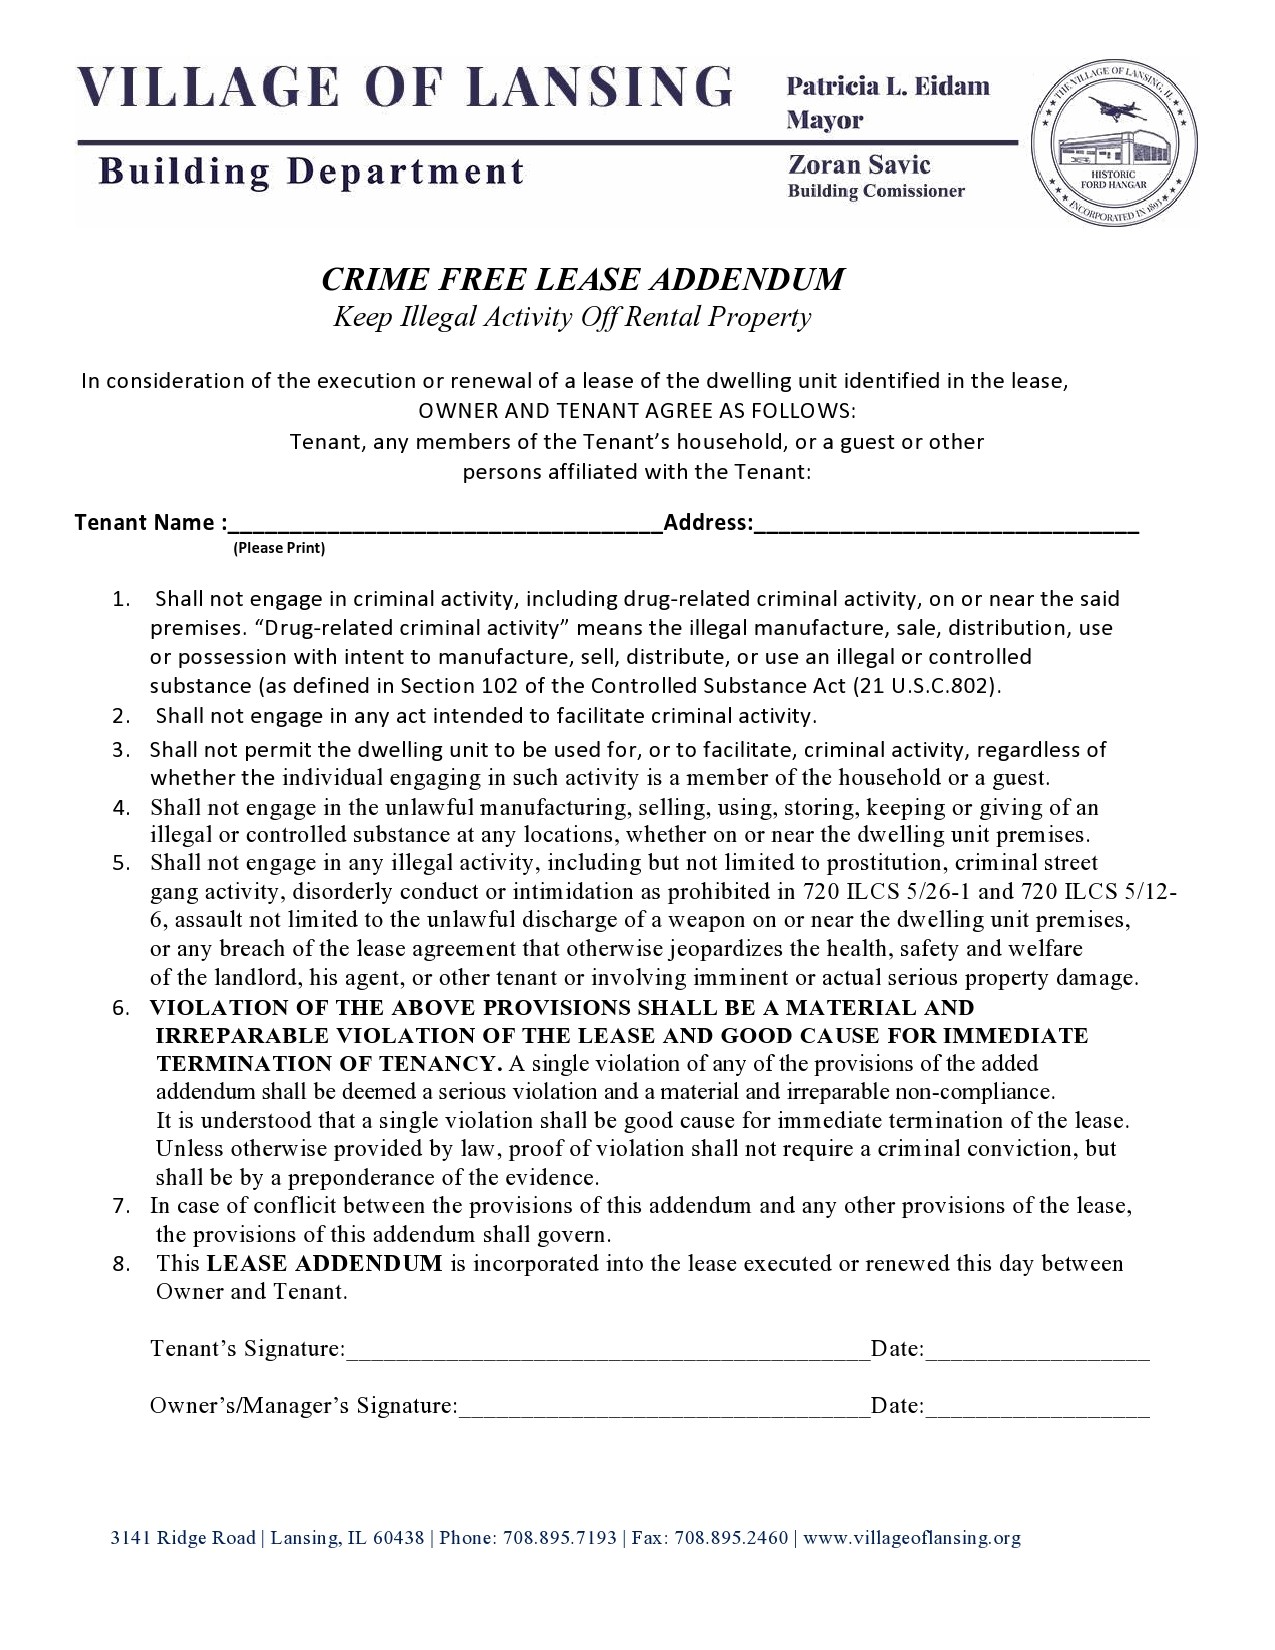 Free lease addendum 14